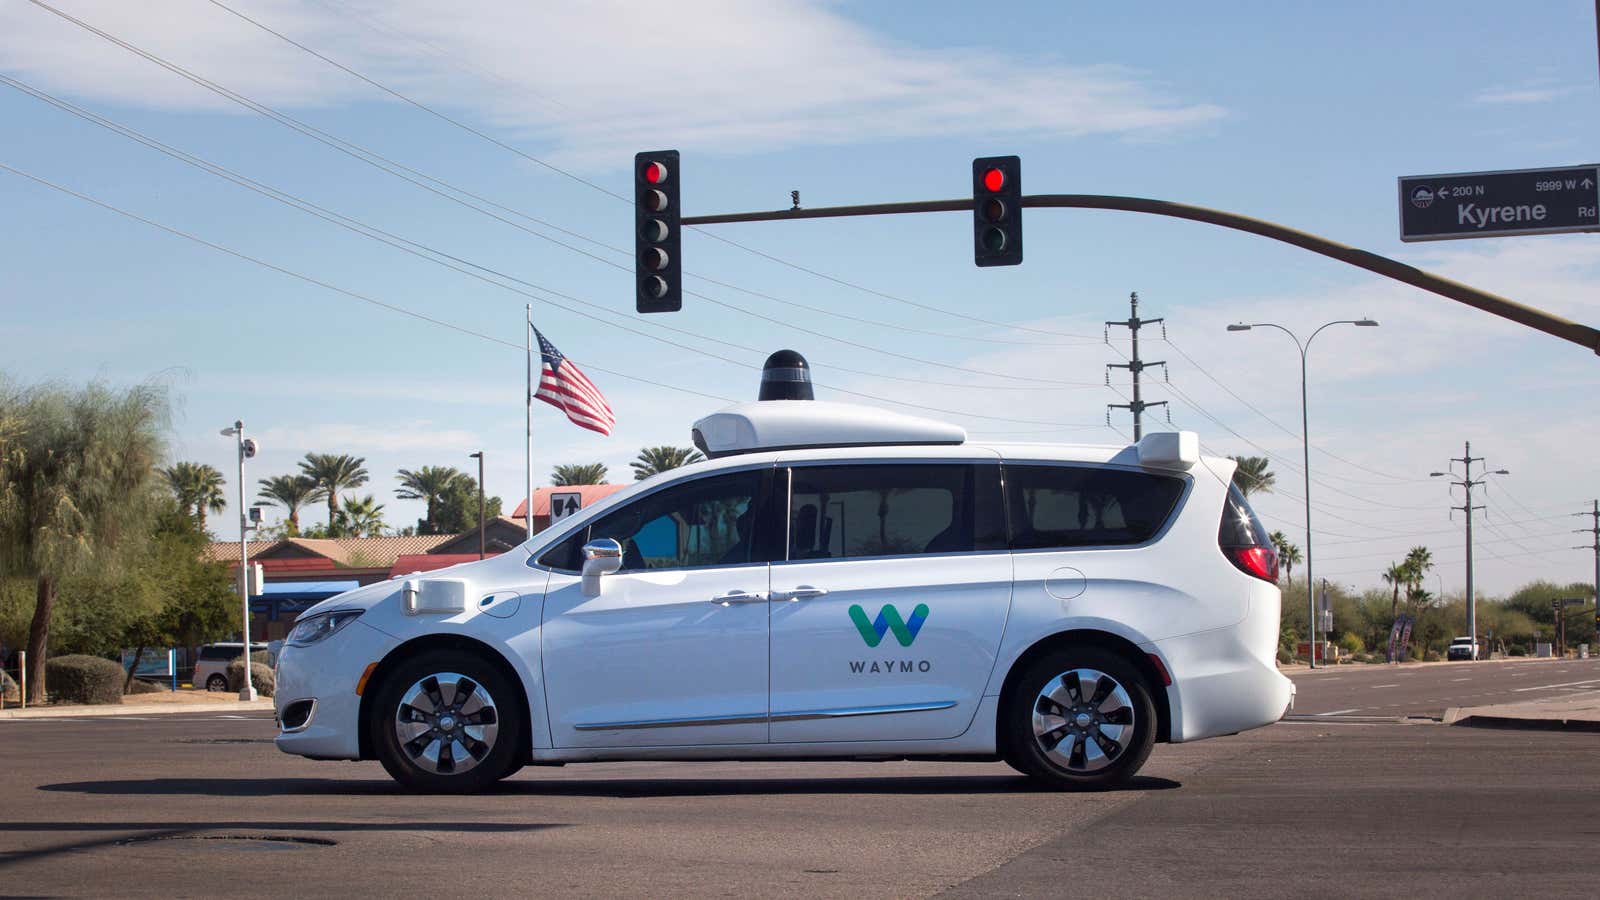 A Waymo self-driving car driving through an intersection in Chandler, Arizona.